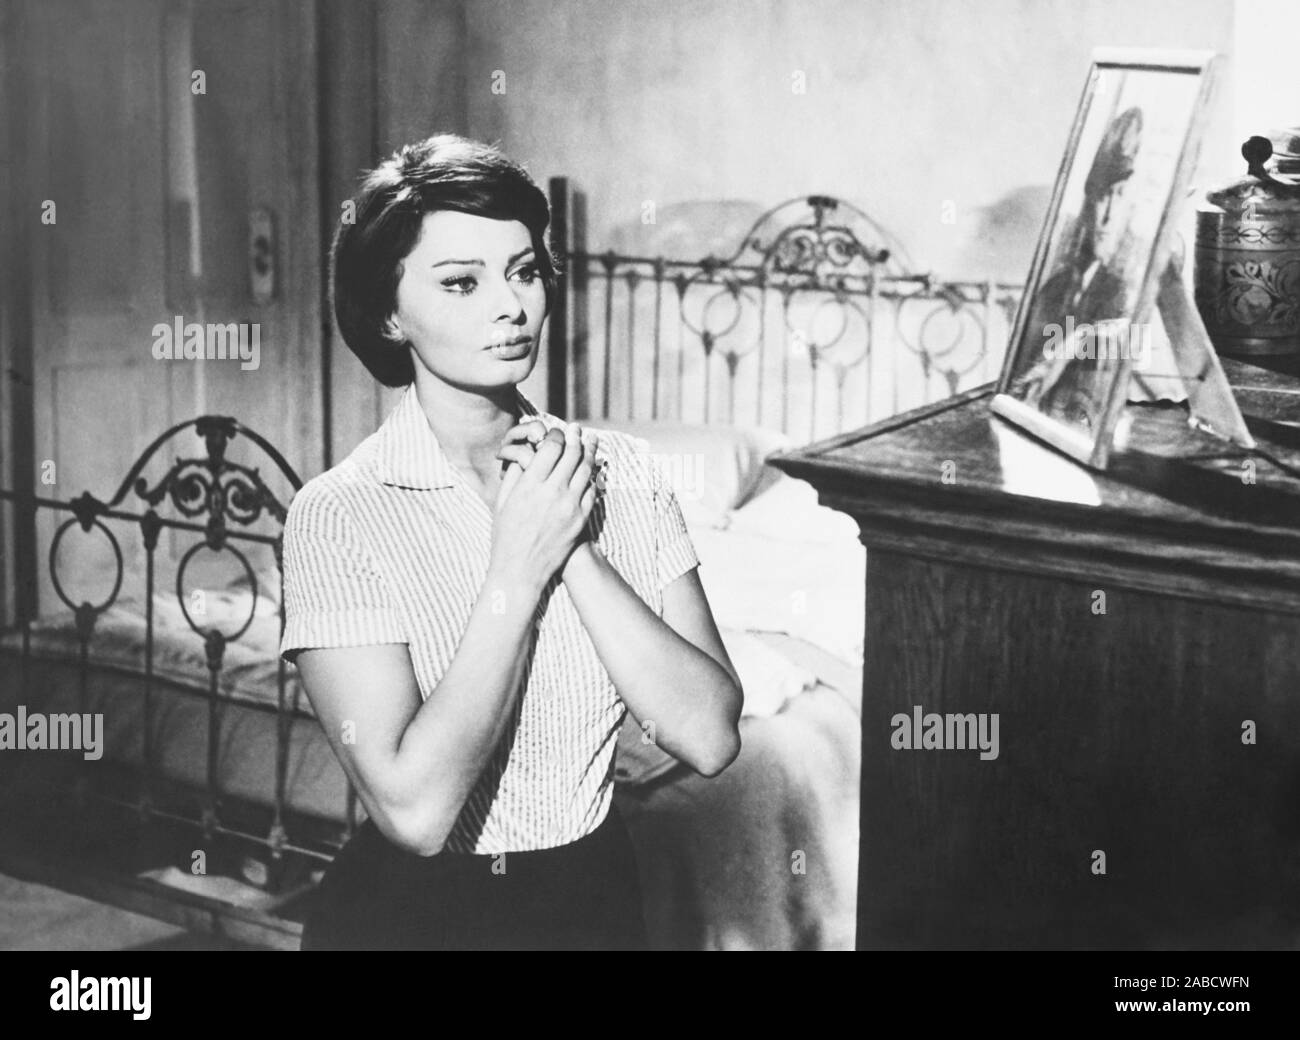 THE KEY, Sophia Loren, 1958 Stock Photo - Alamy